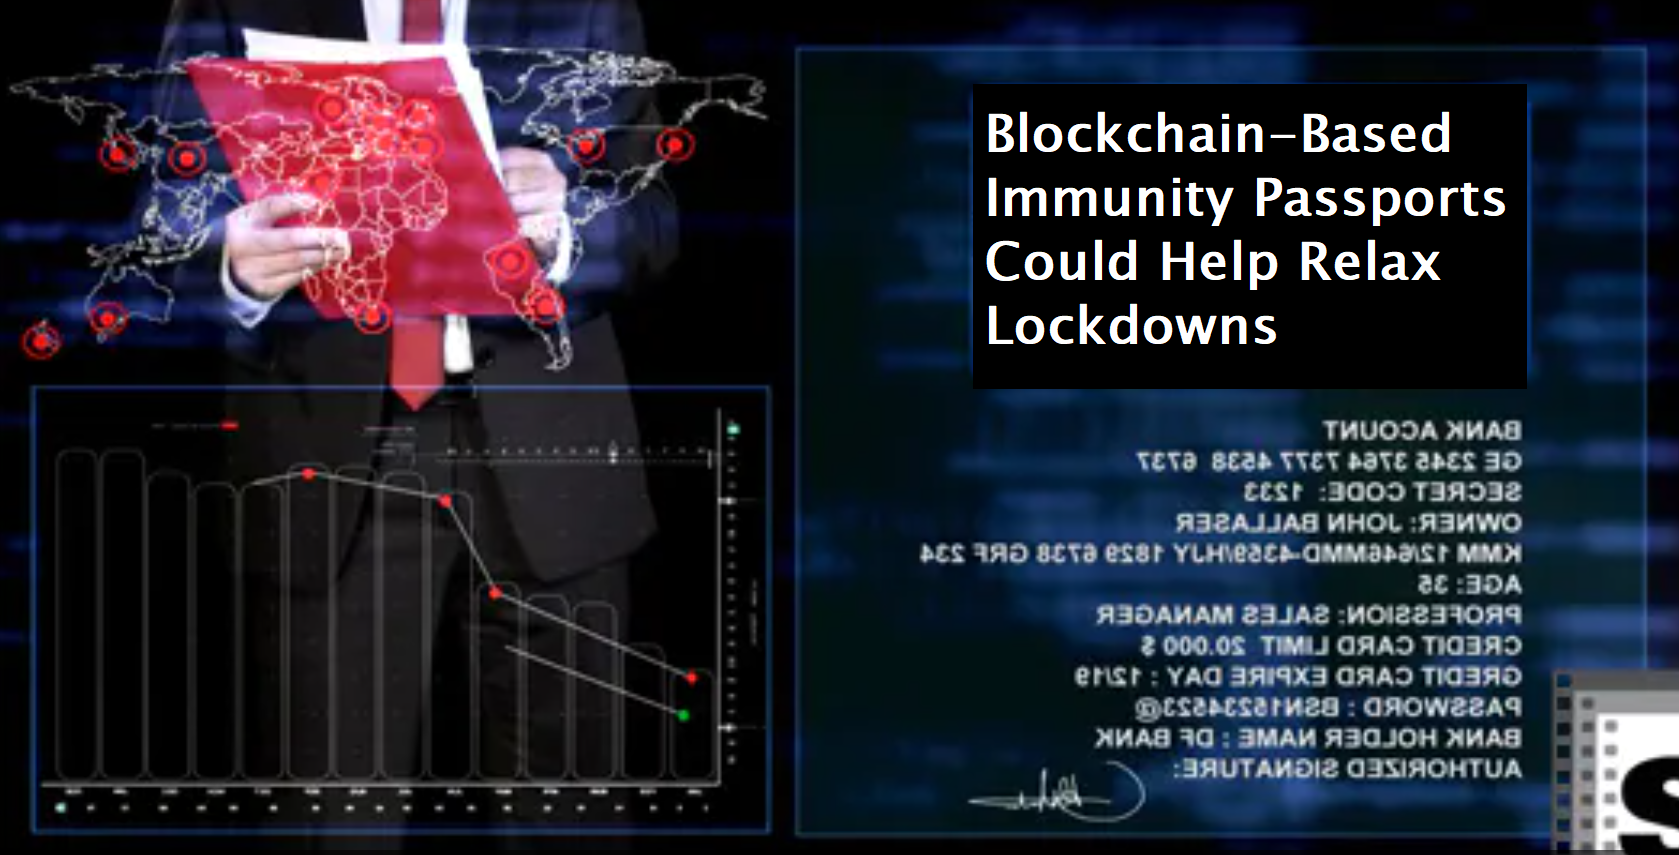 Blockchain-Based Immunity Passports Could Help Relax Lockdowns